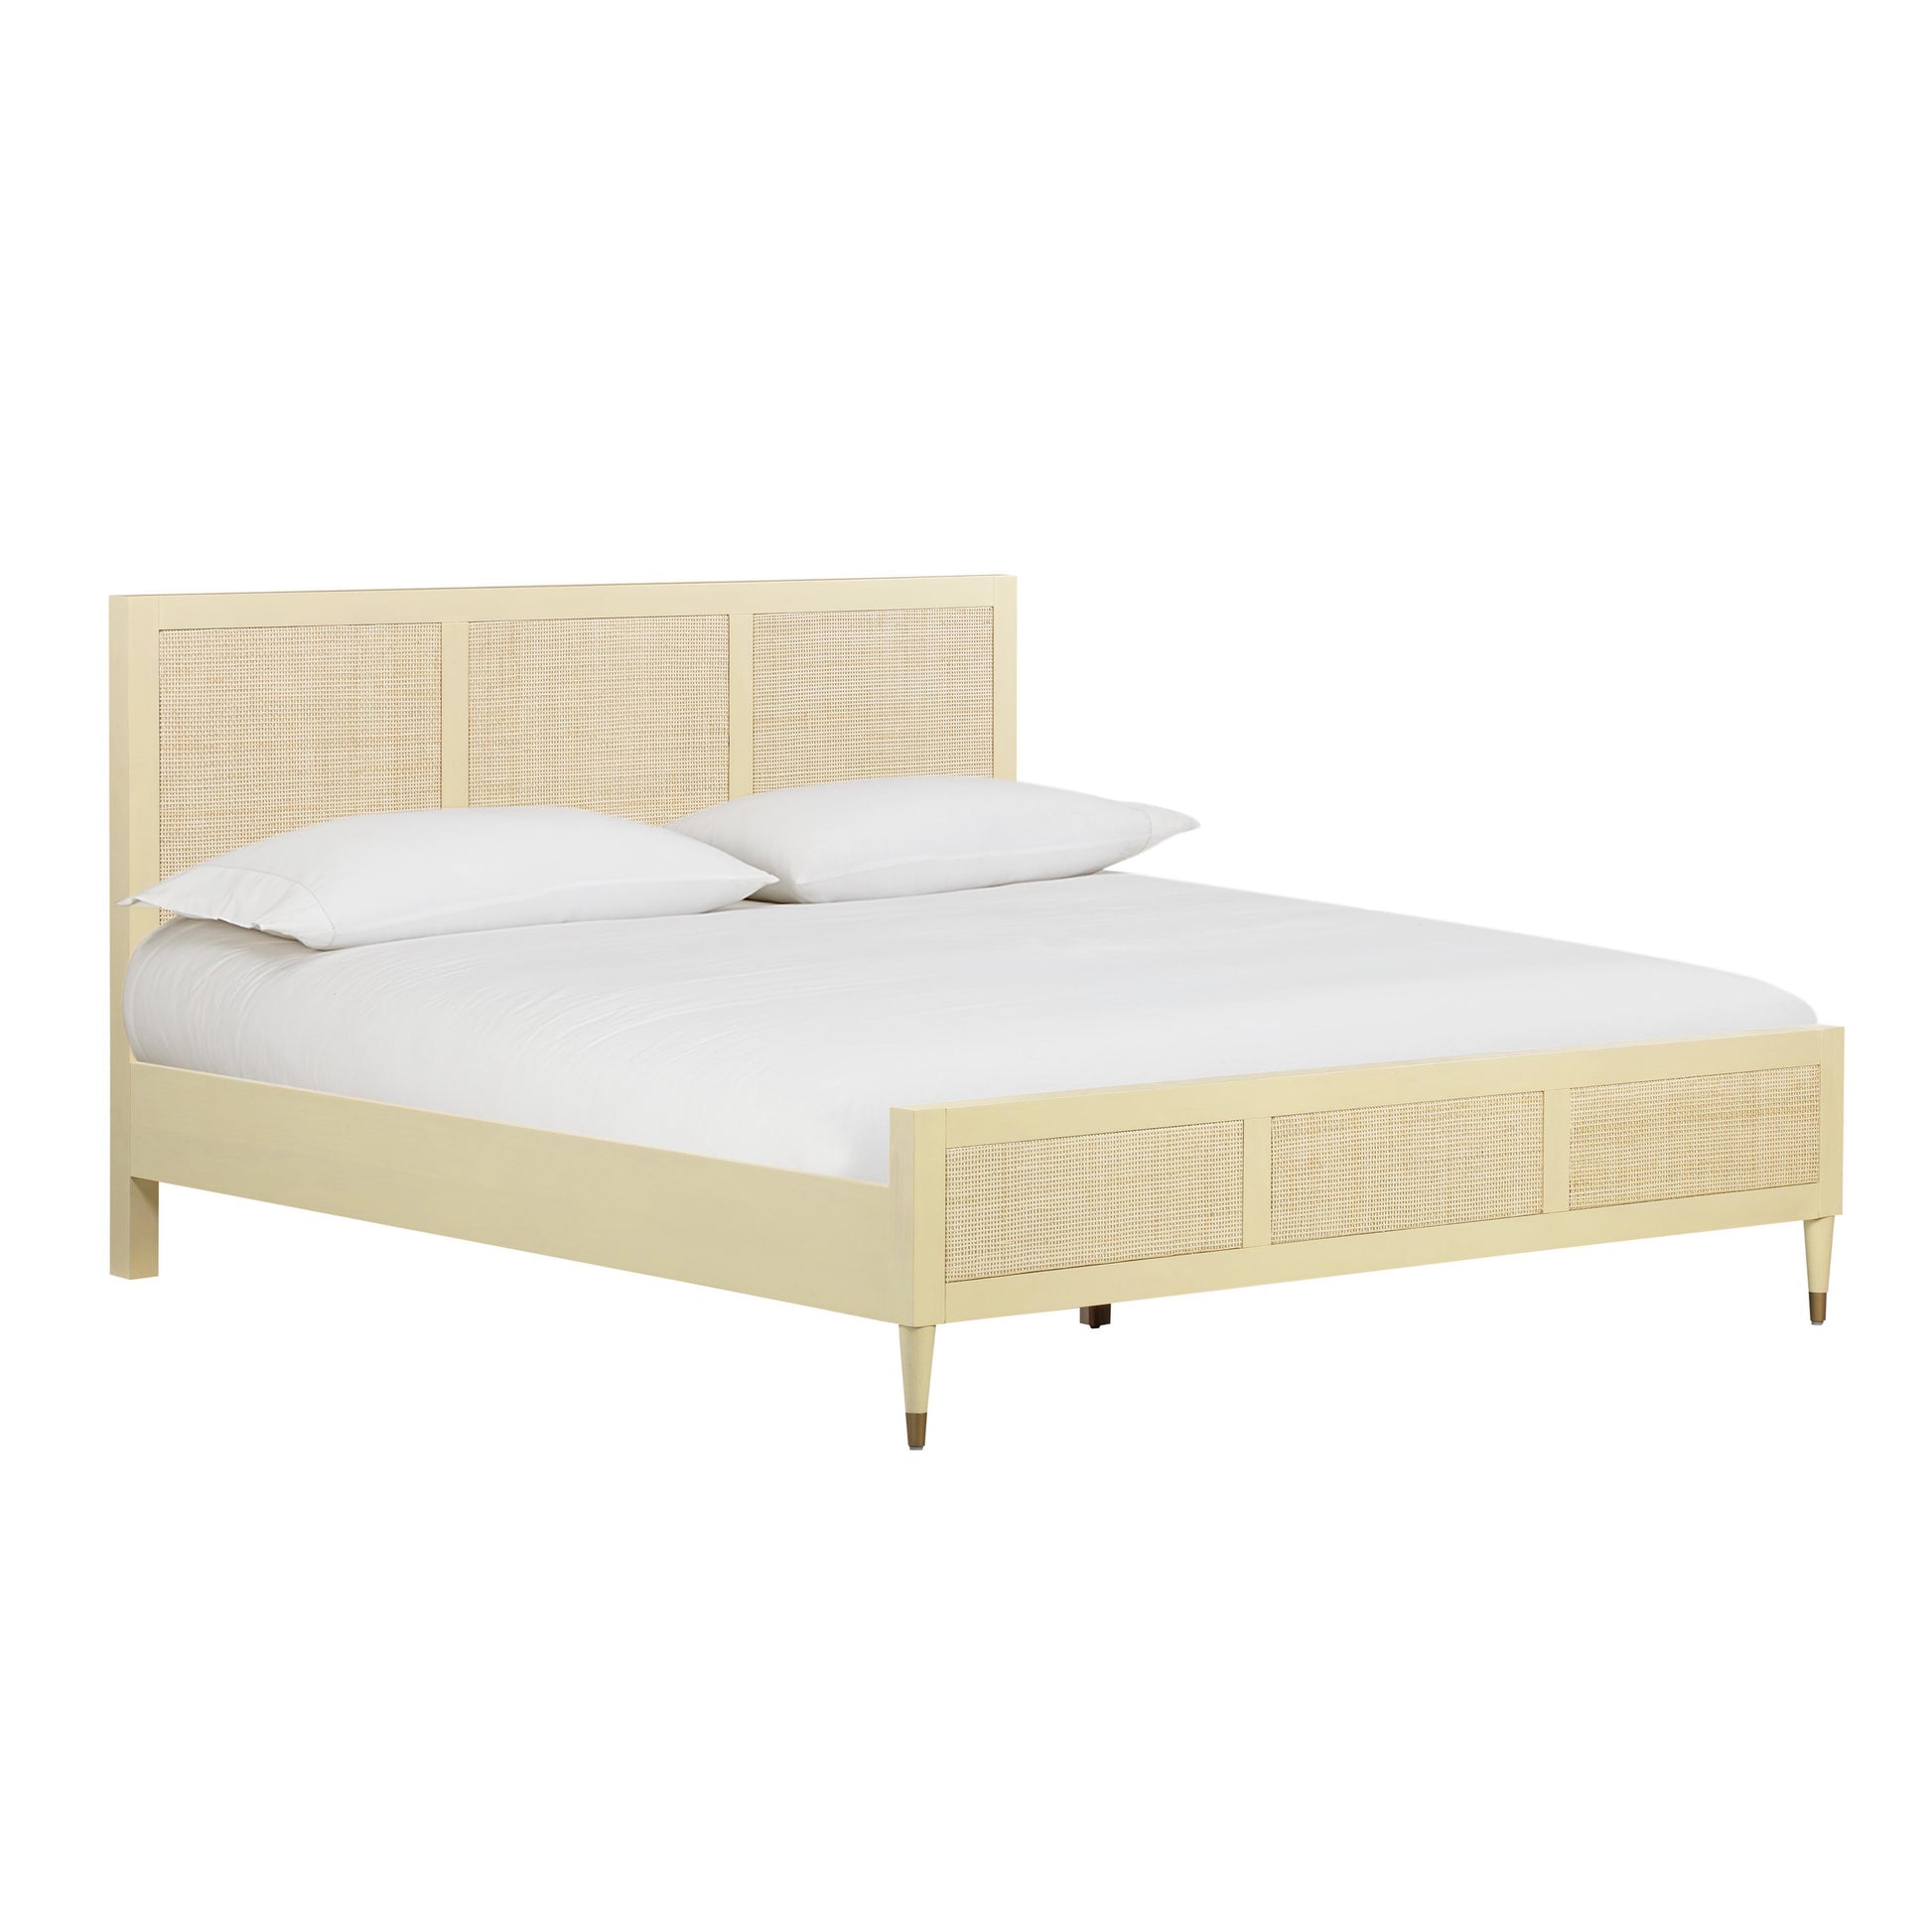 Tov Furniture Sierra Buttermilk King Bed